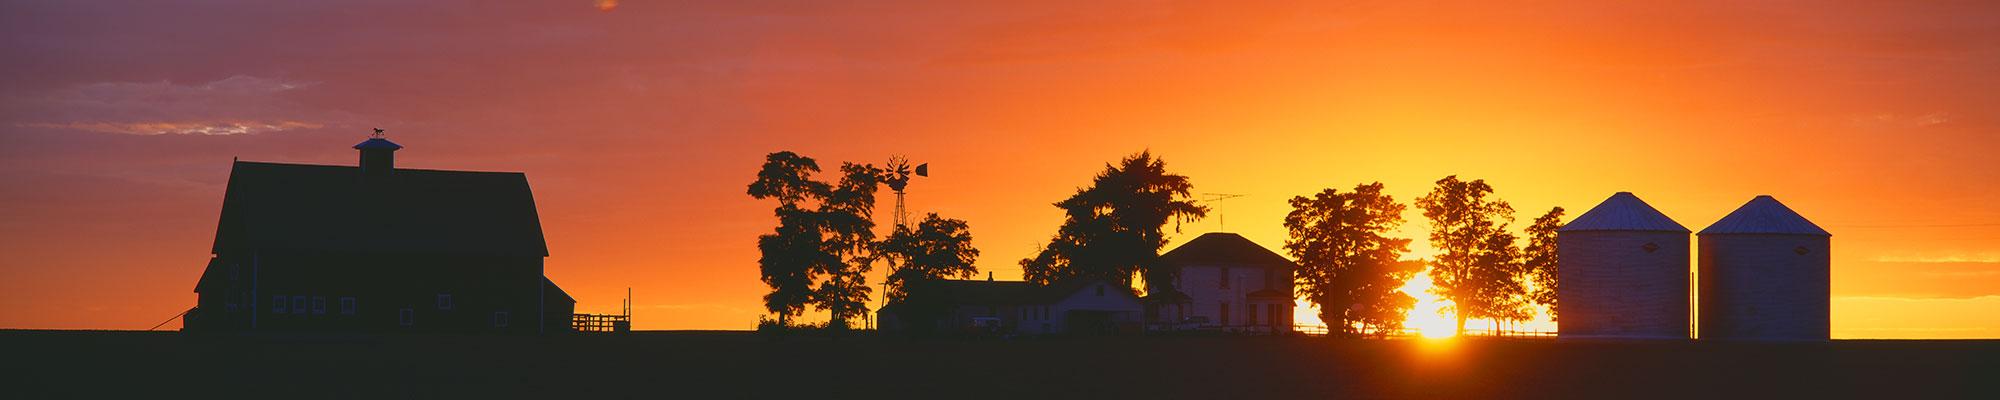 Farm at sunset in Ritzville, WA